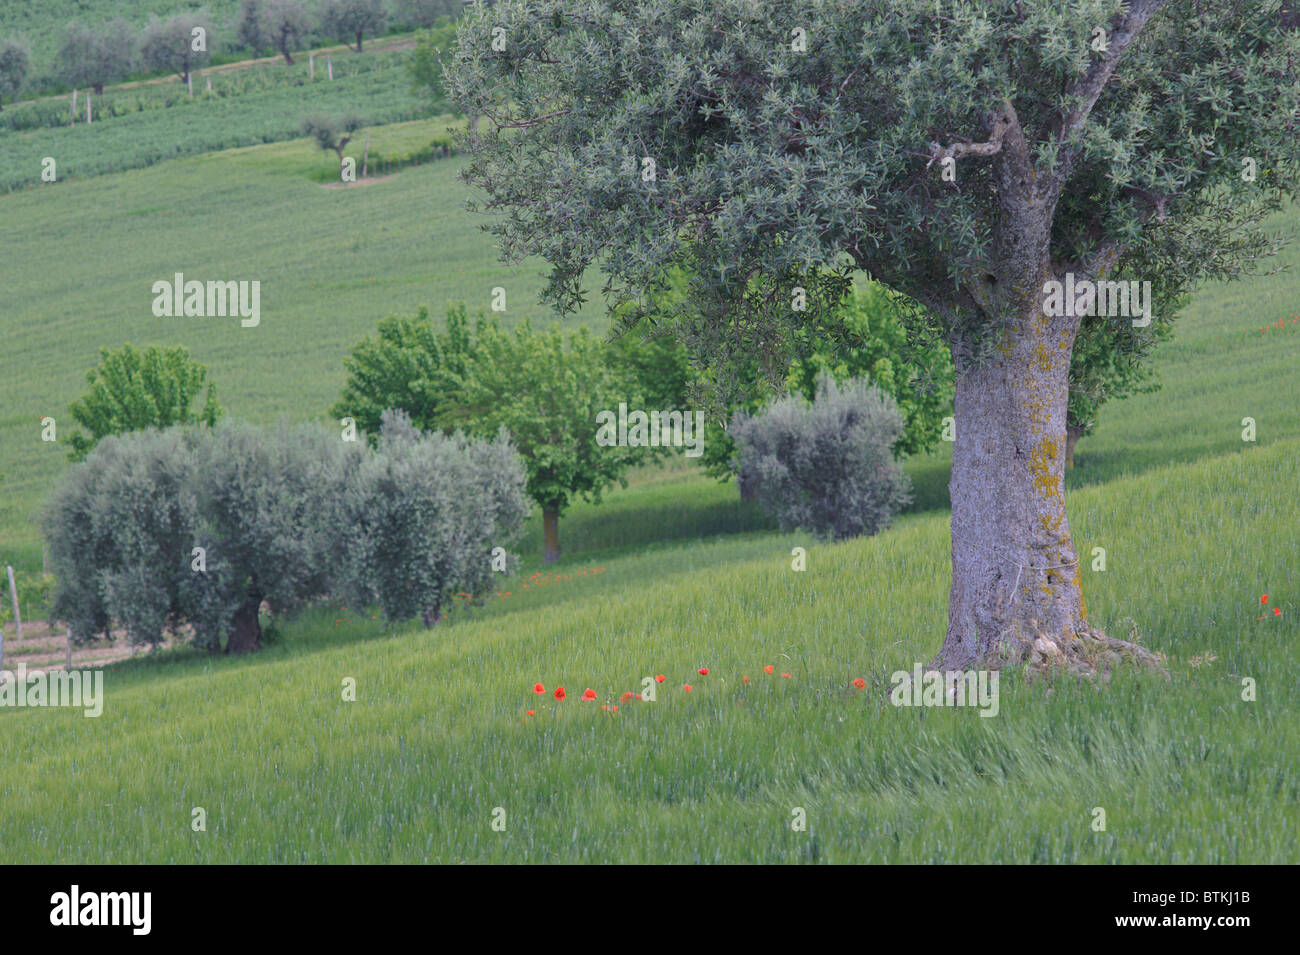 Olive trees near Macerata Le Marche Italy with poppies Stock Photo